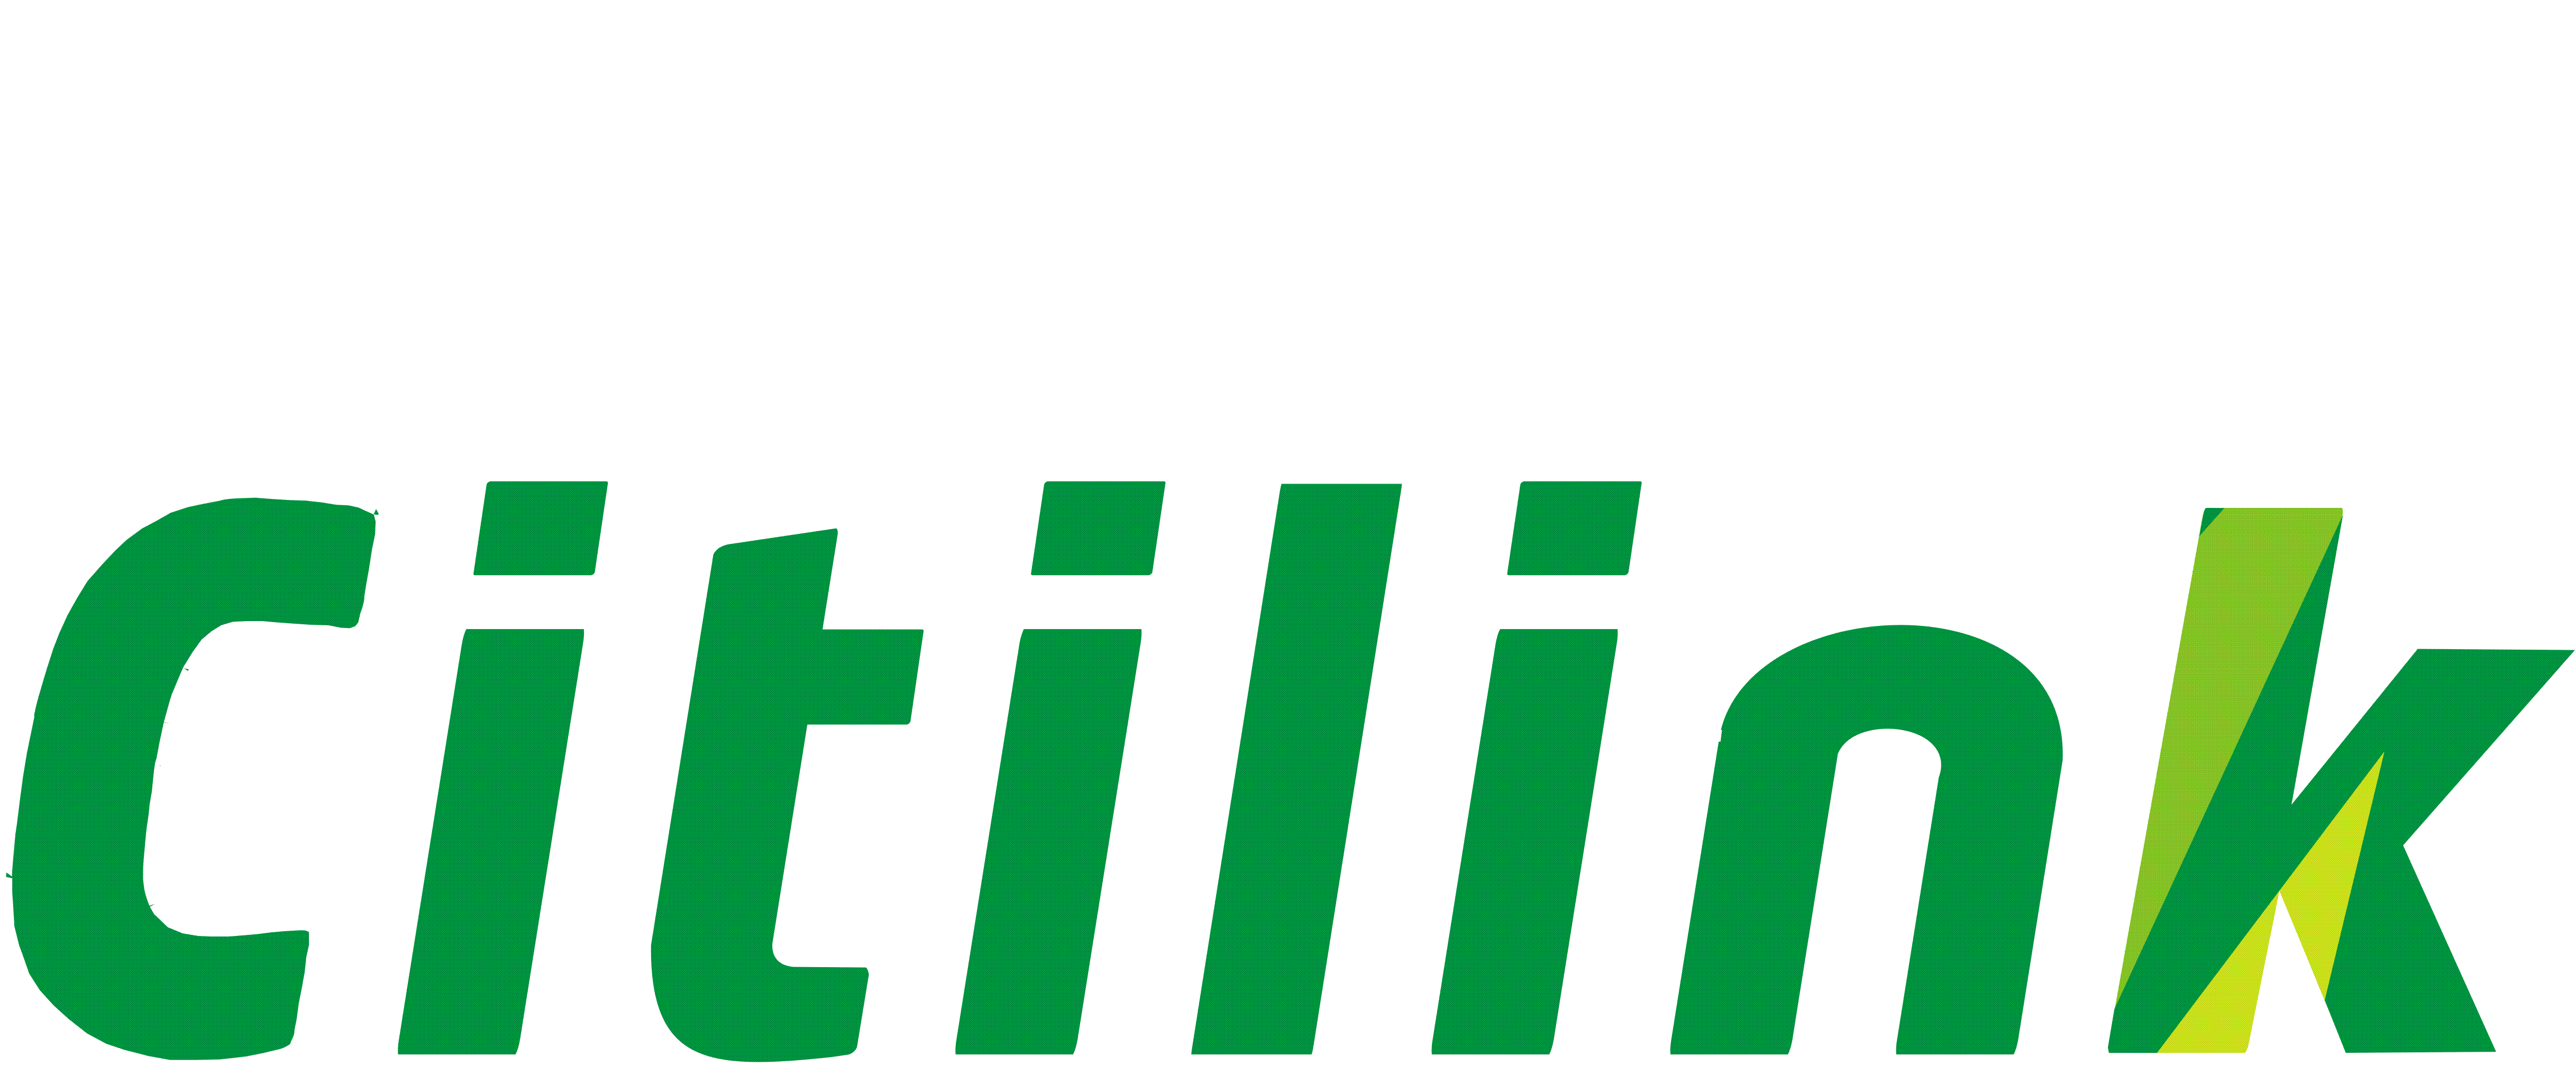 Citilink Logo - citilink logo png - AbeonCliparts | Cliparts & Vectors